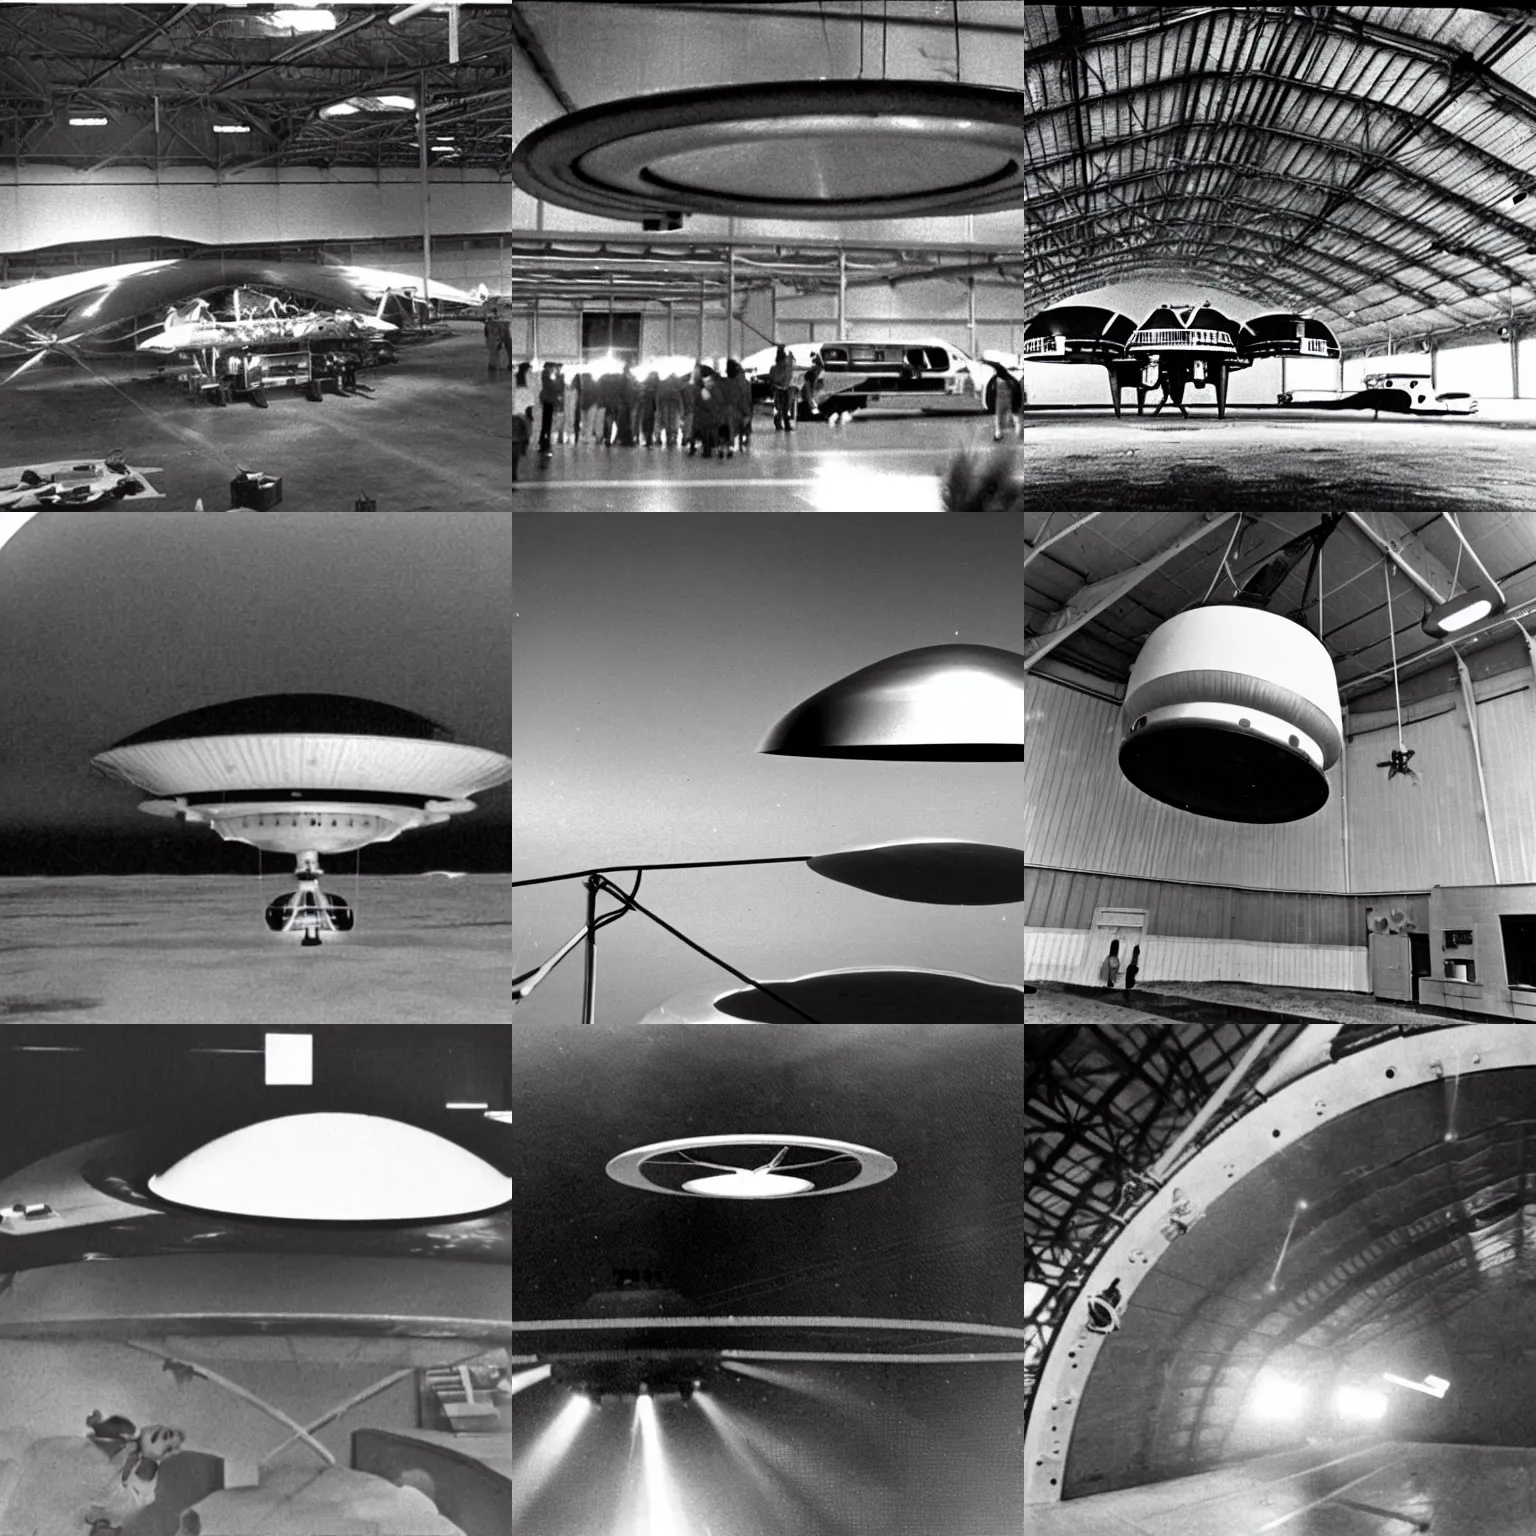 Prompt: Scientists examine UFO in a secret hangar, 1970s, hidden camera, black and white photo